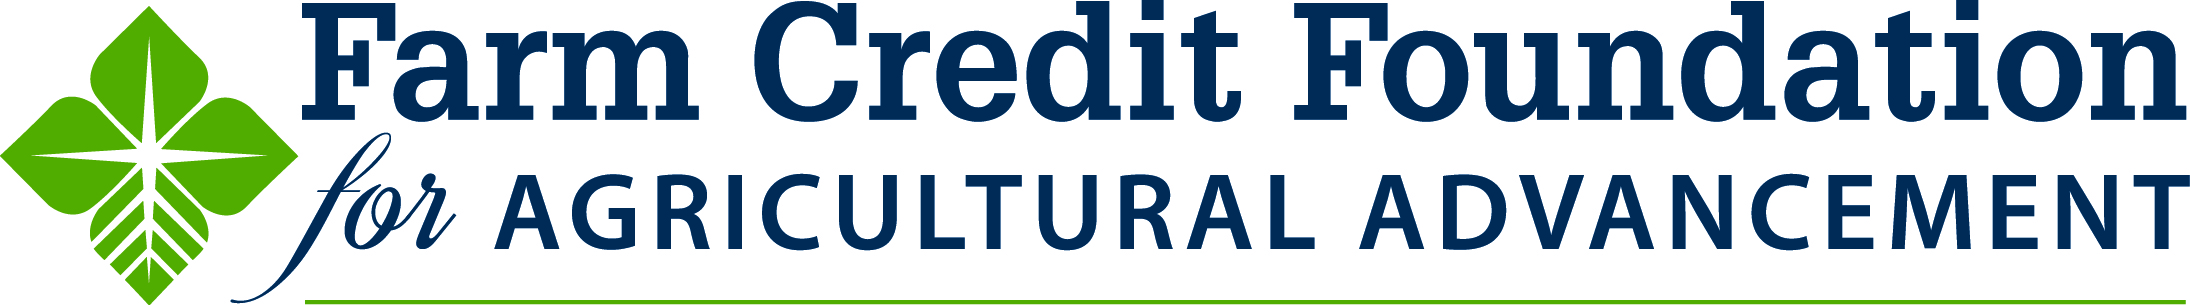 Farm Credit Foundation for Agricultural Advancement logo